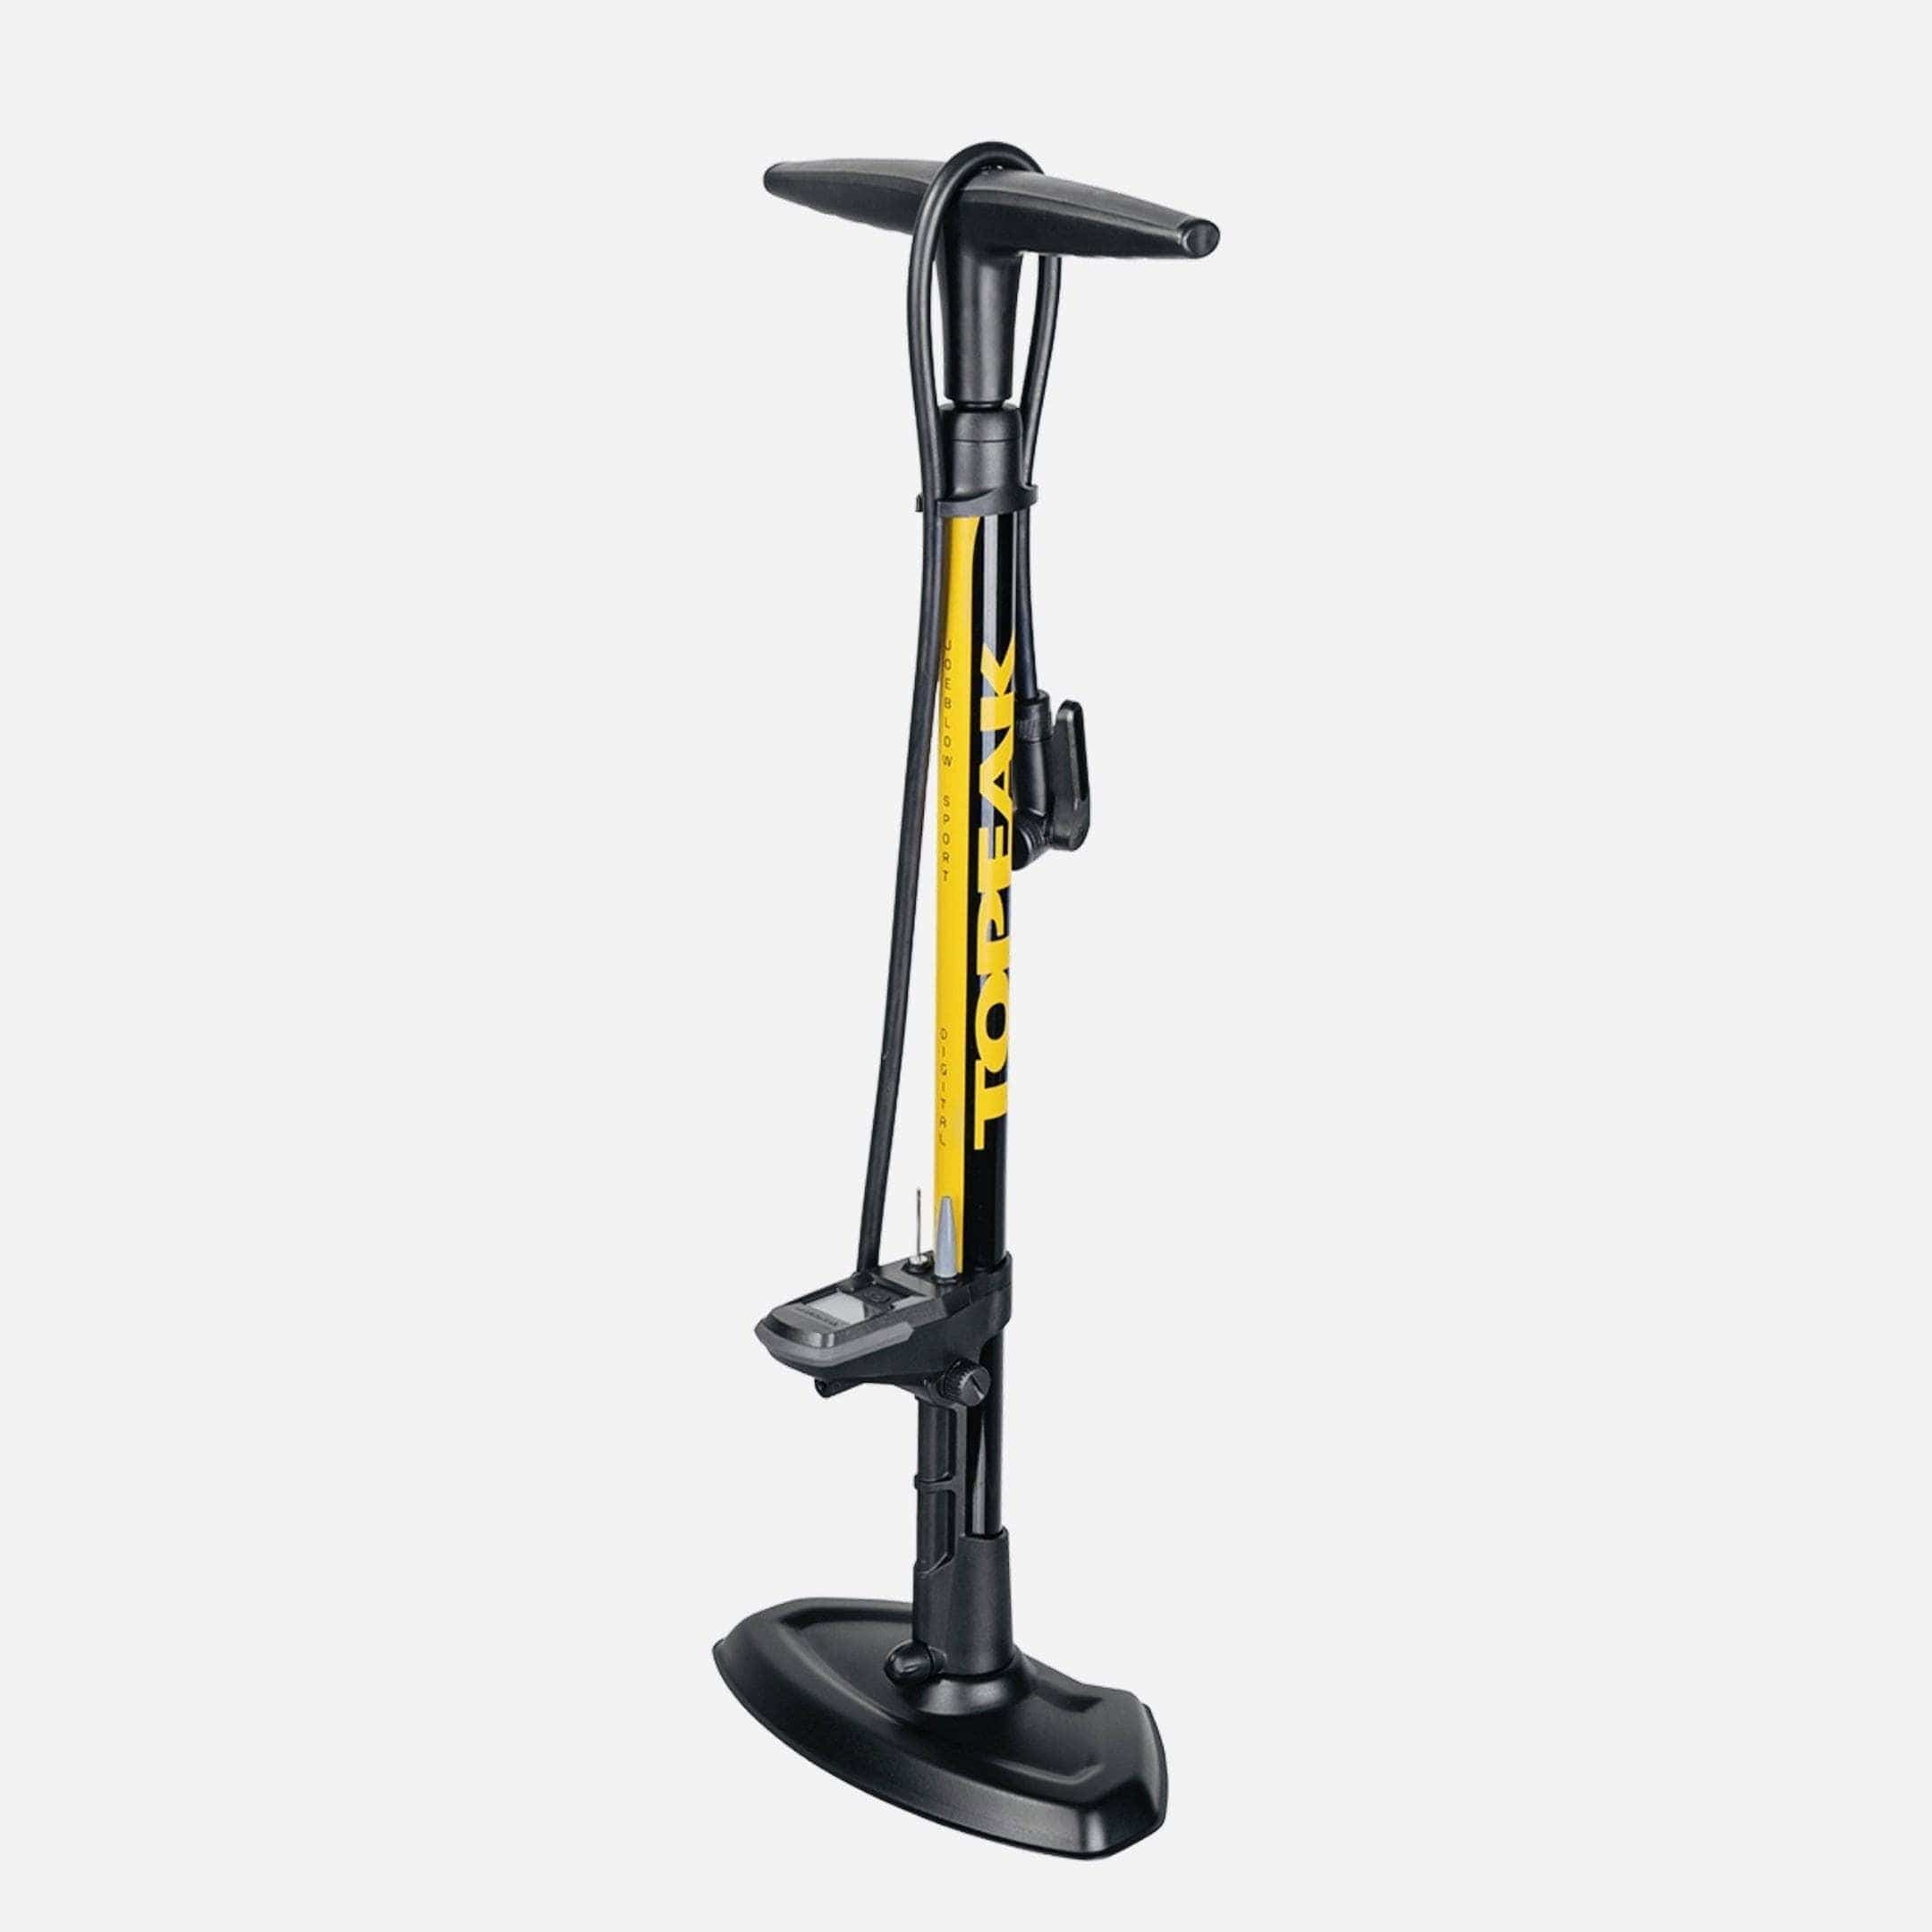 Topeak JoeBlow Sport Digital Floor Pump Black/Yellow Accessories - Pumps